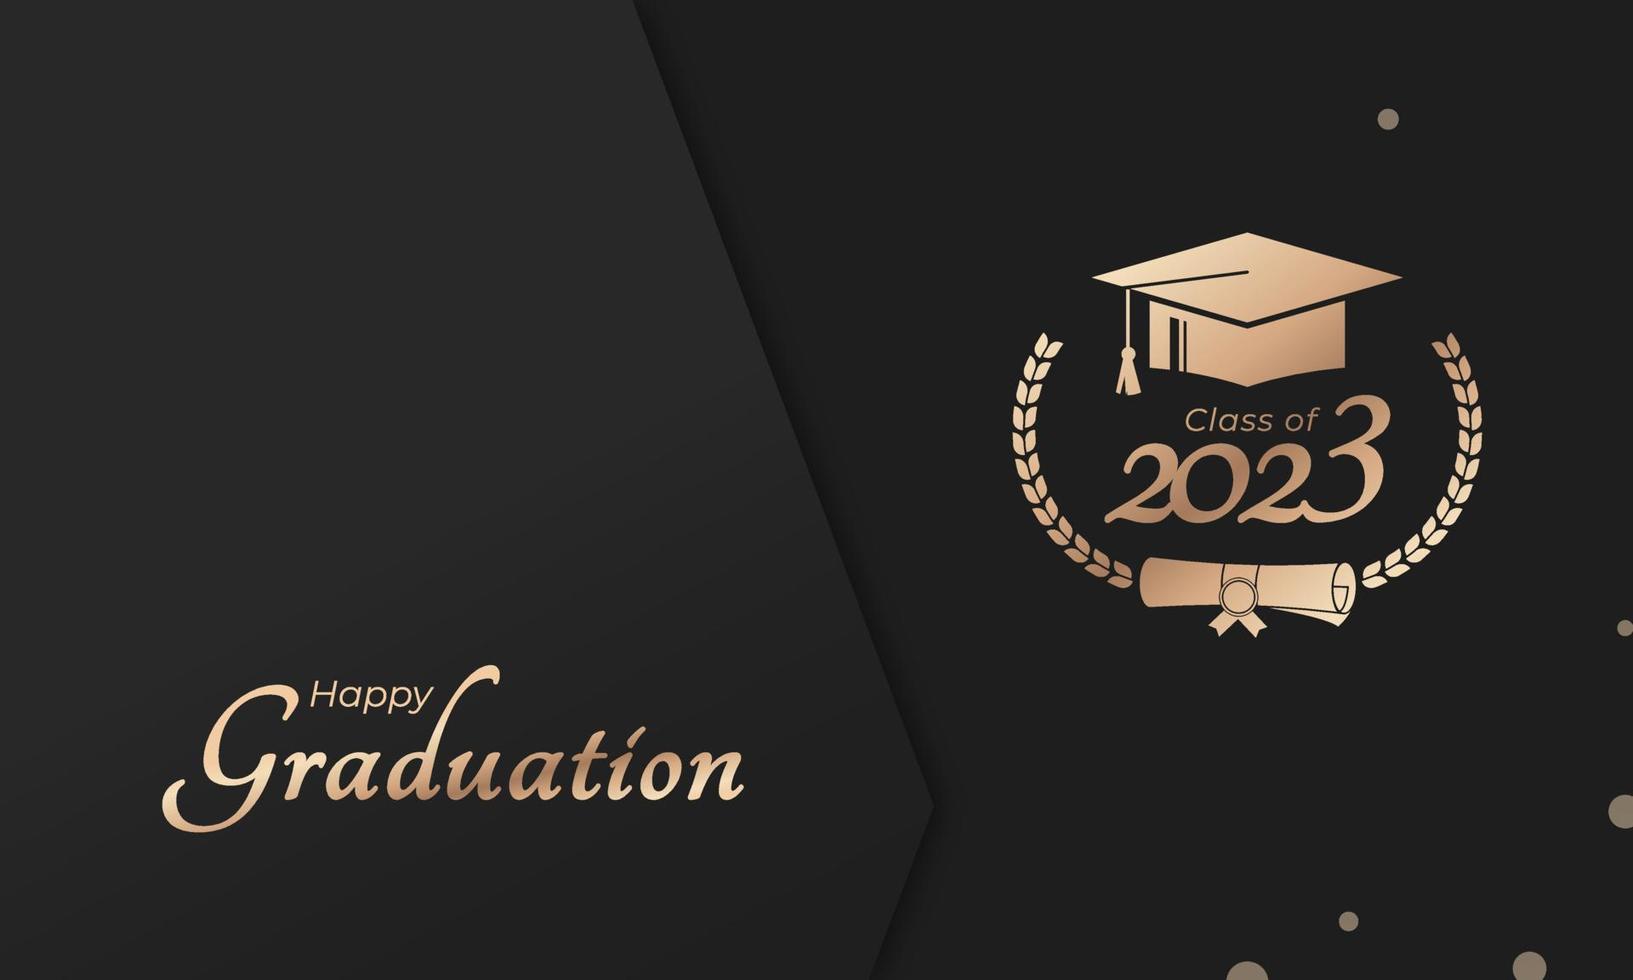 Class of 2023 Year Graduation of Decorate Congratulation with Laurel Wreath for School Graduates vector